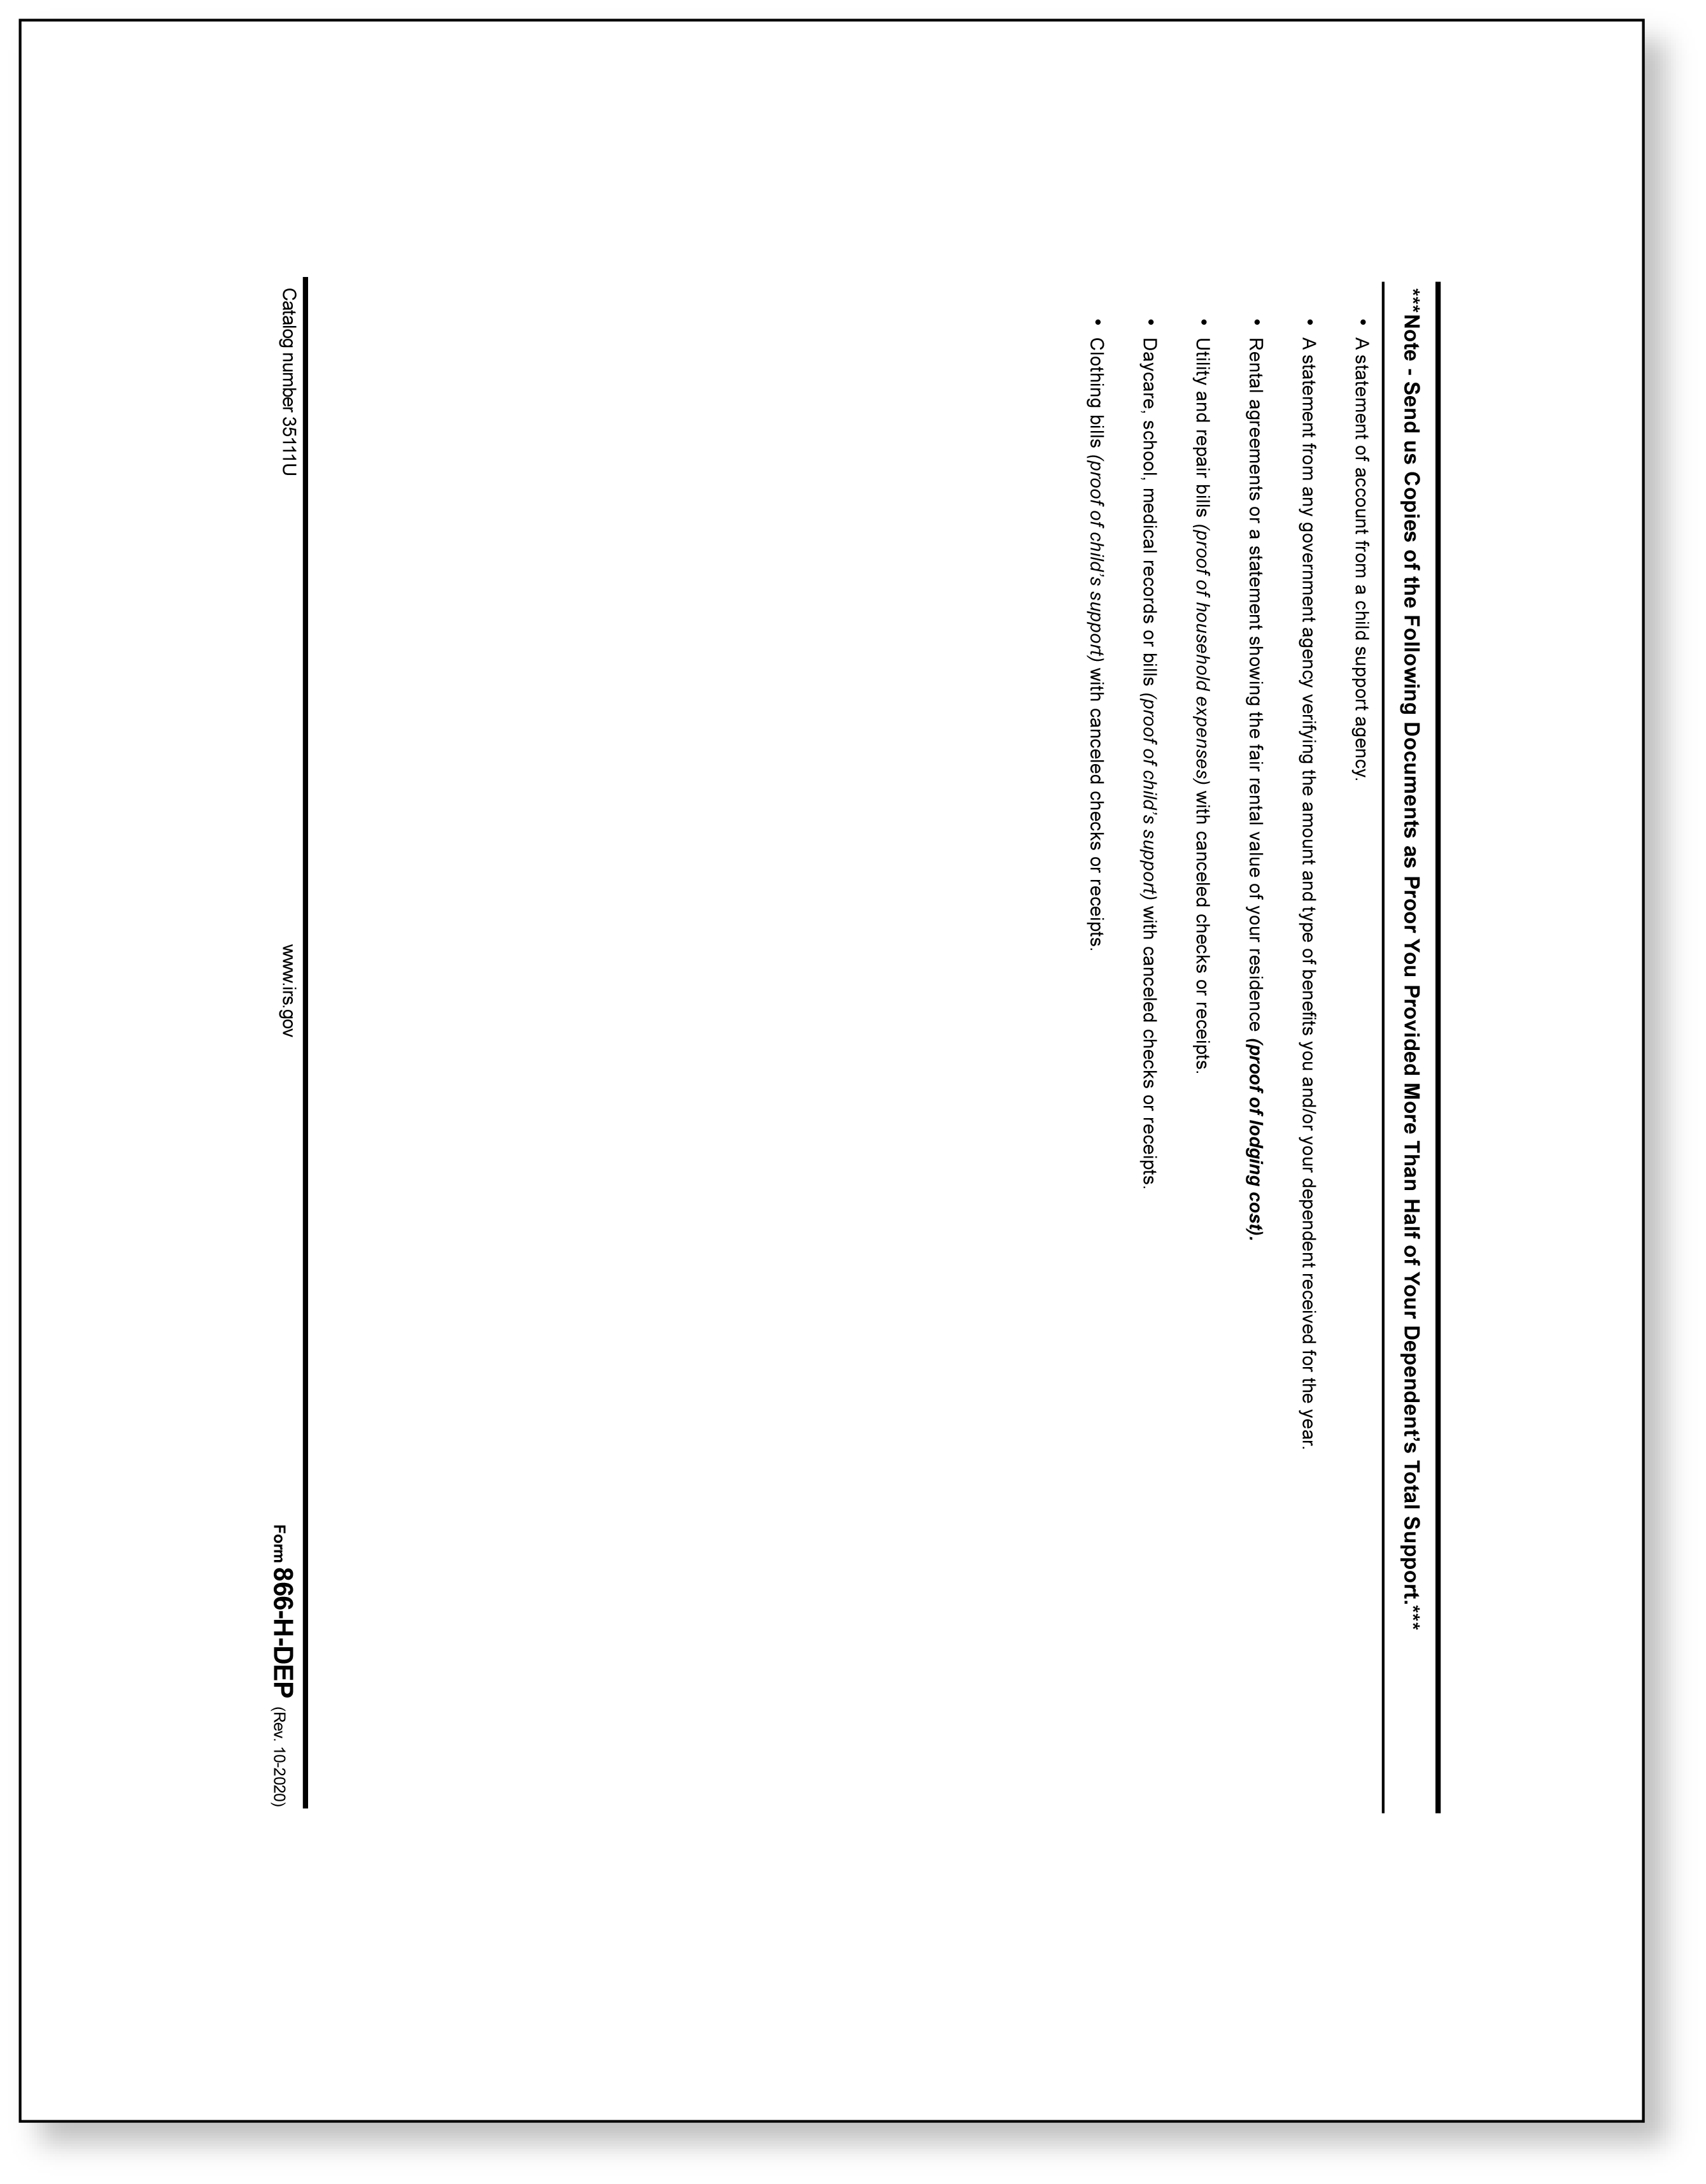 IRS Audit Letter CP75D – Sample 1